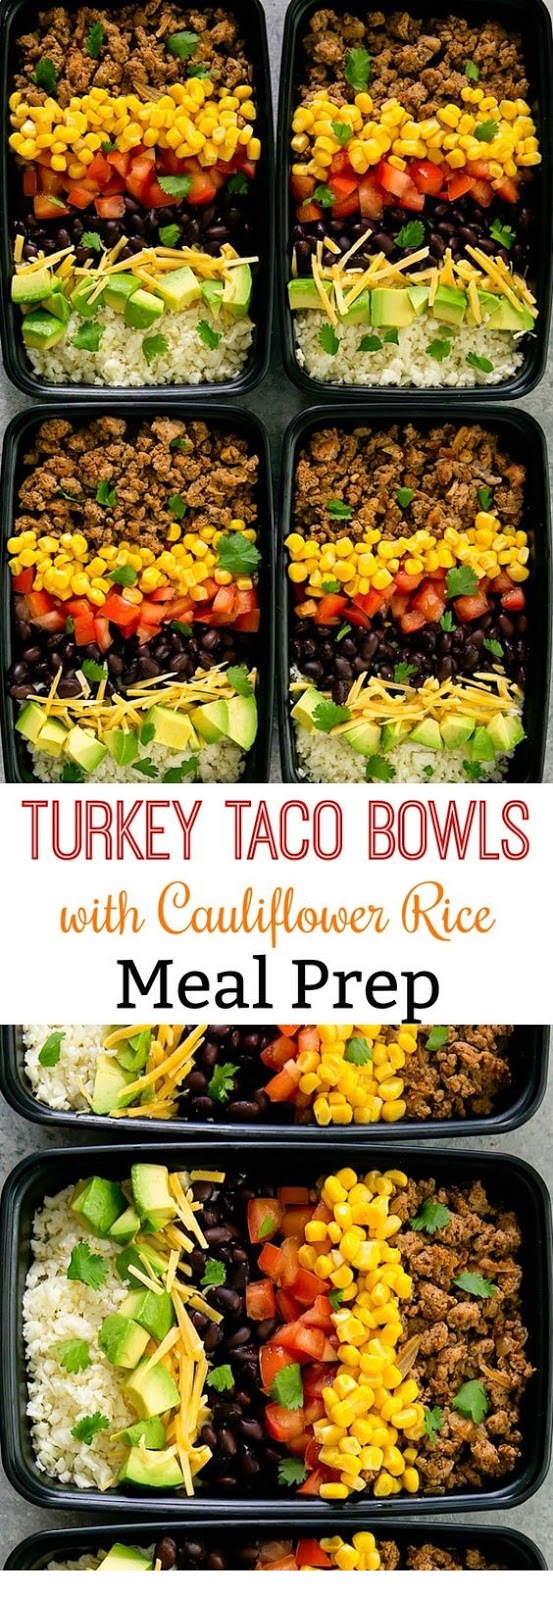 Turkey Taco Bowls With Cauliflower Rice Meal Prep